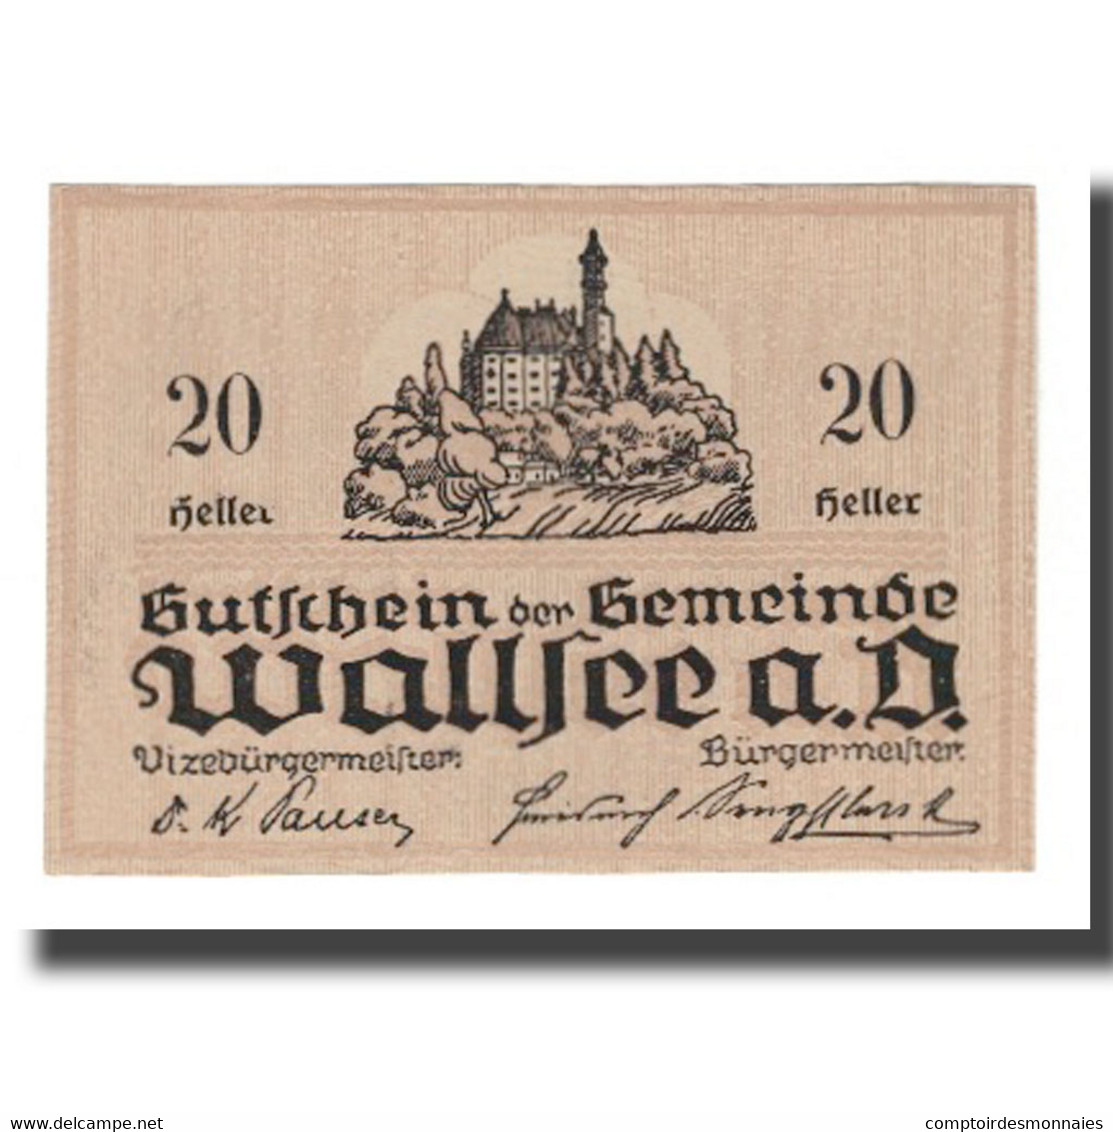 Billet, Autriche, Wallsee N.Ö. Gemeinde, 20 Heller, Valeur Faciale, 1920 - Autriche